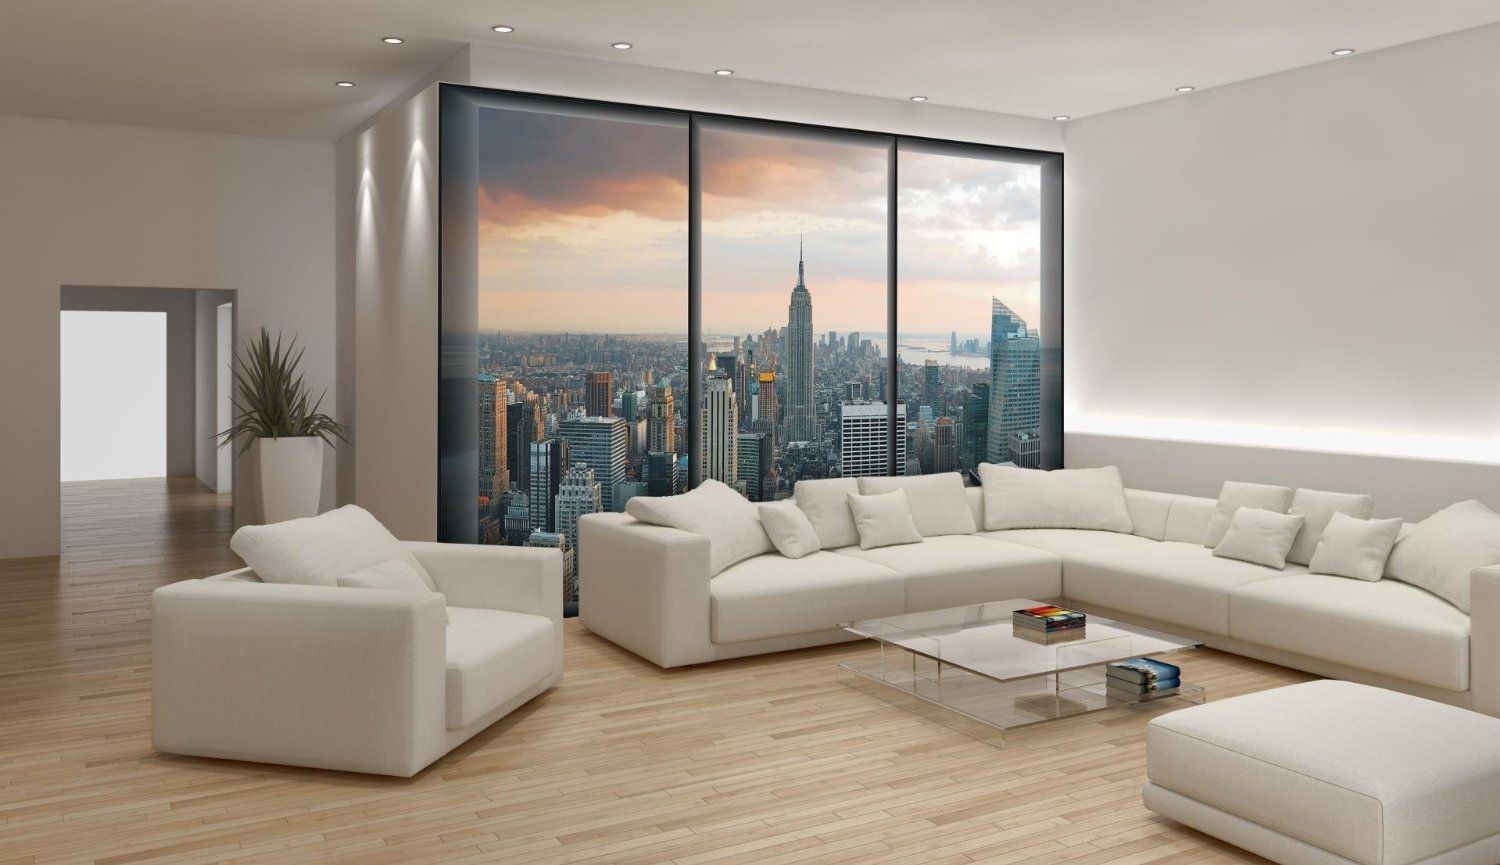 New York City Skyline Window View Wallpaper Mural - - Amazon.com